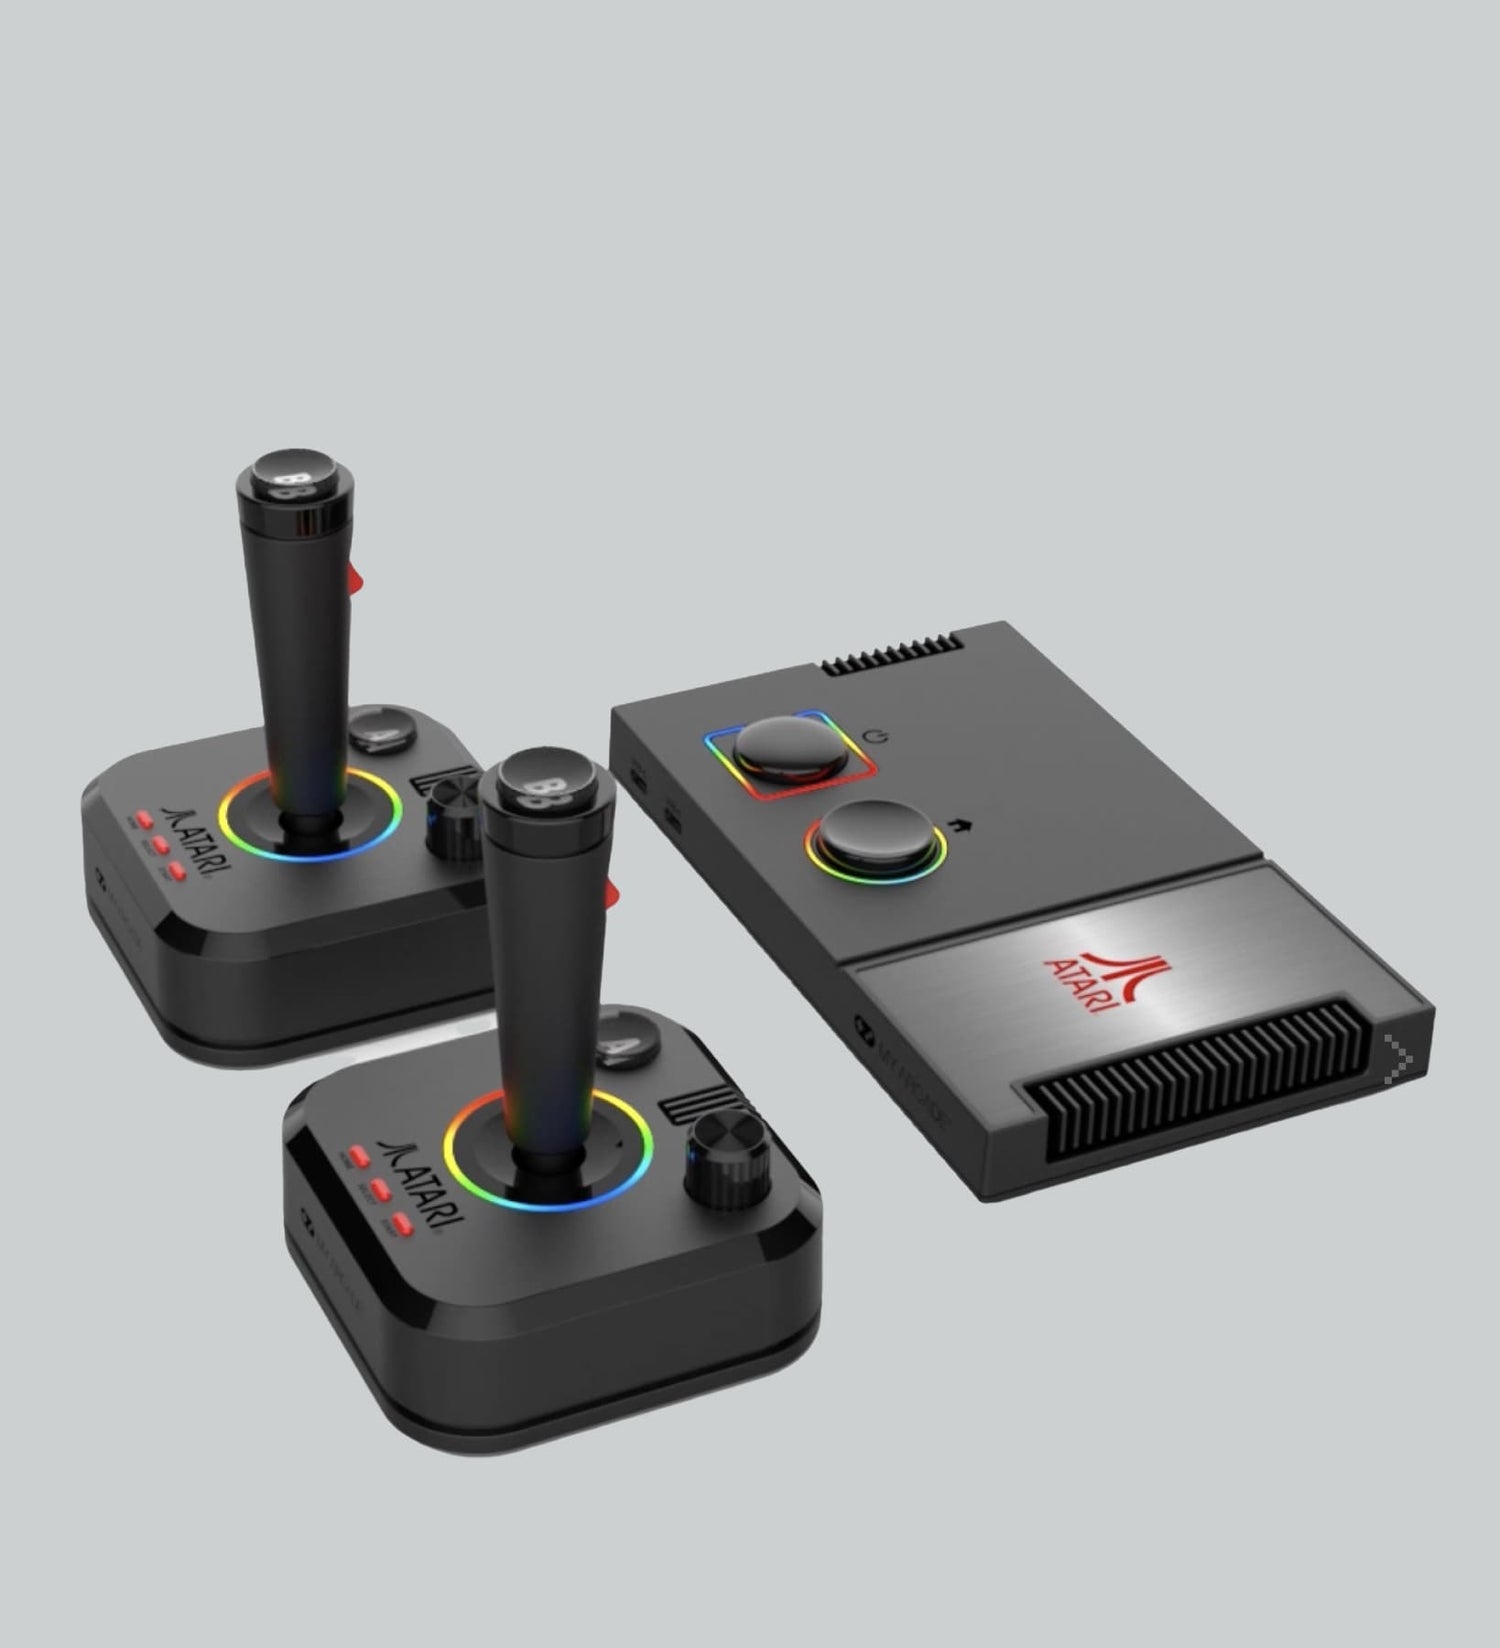 Atari x Dreamgear